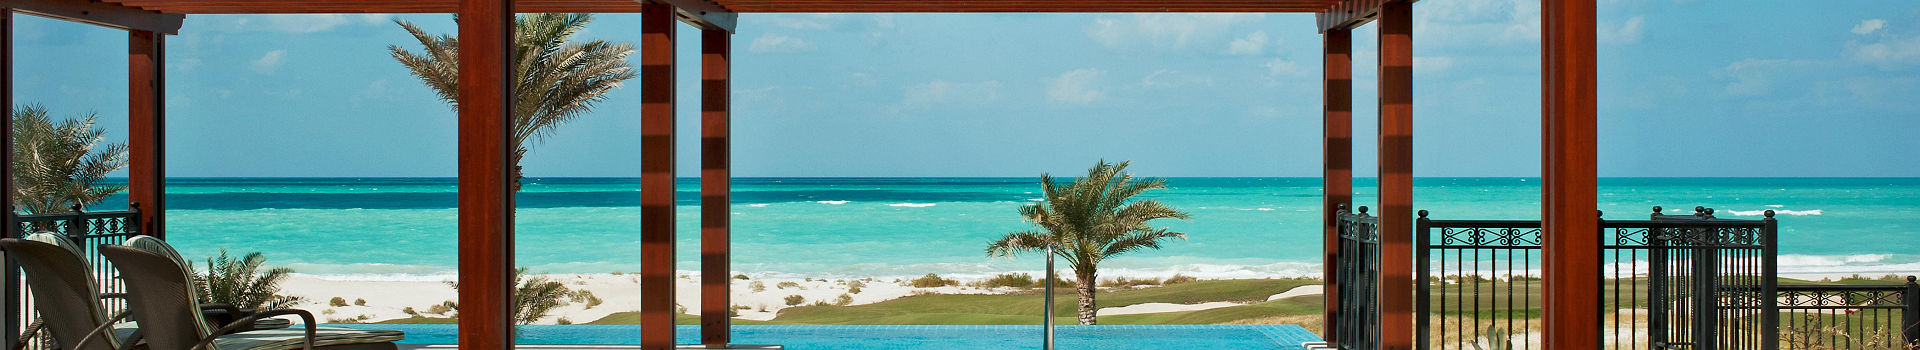 St Regis Saadiyat Island Resort - Abu Dhabi